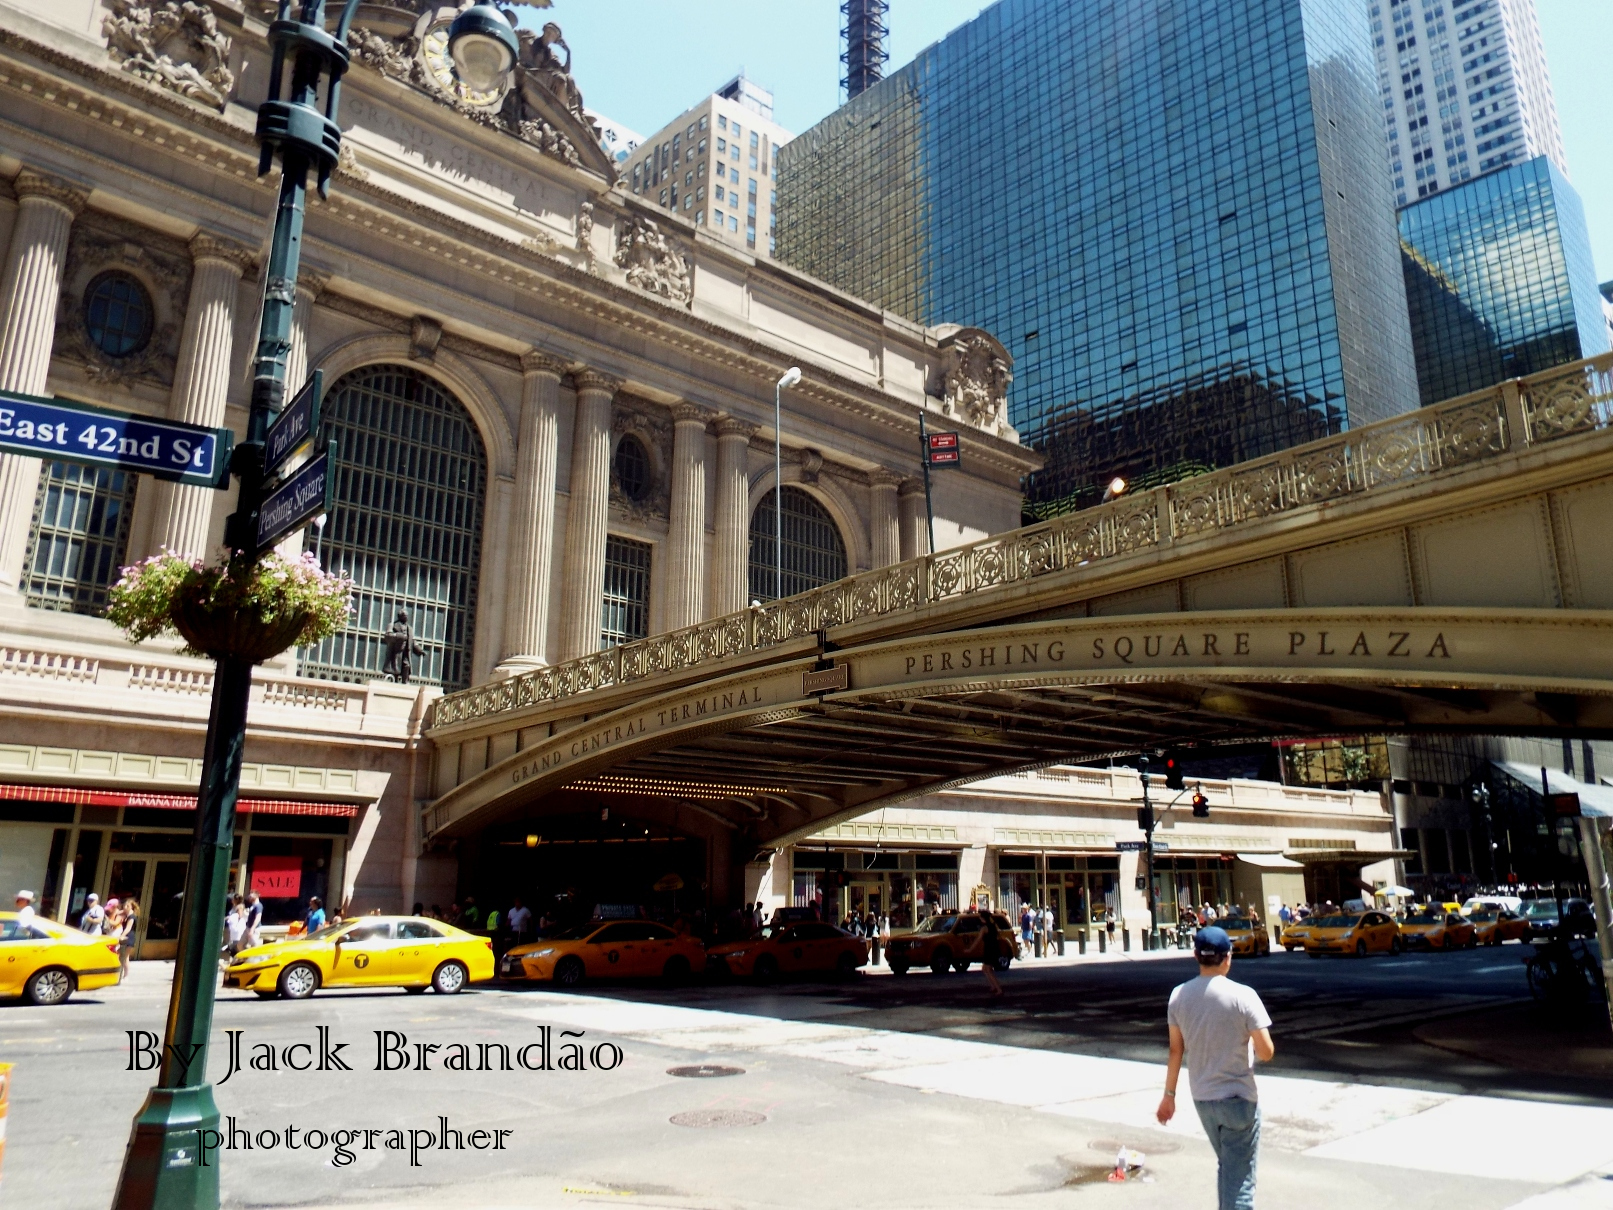  People; The New York Public Library; Building; USA; New York; Prof. Dr. Jack Brandão; photographer, writer, photos for sale, jackbran